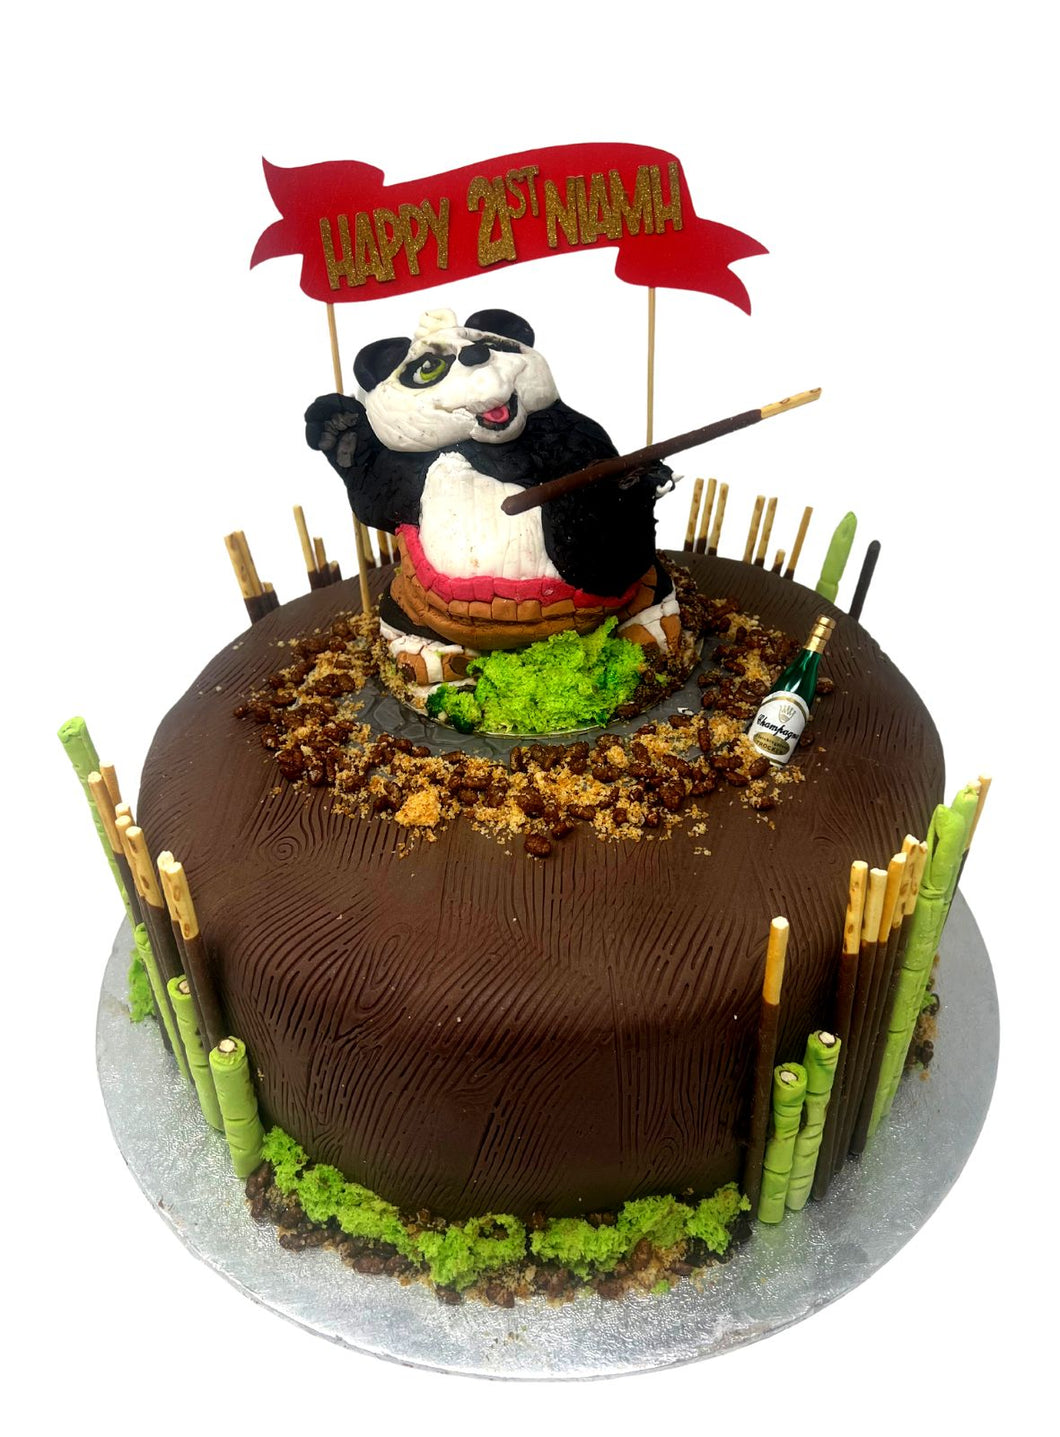 Kung Fu Panda's Party Cake